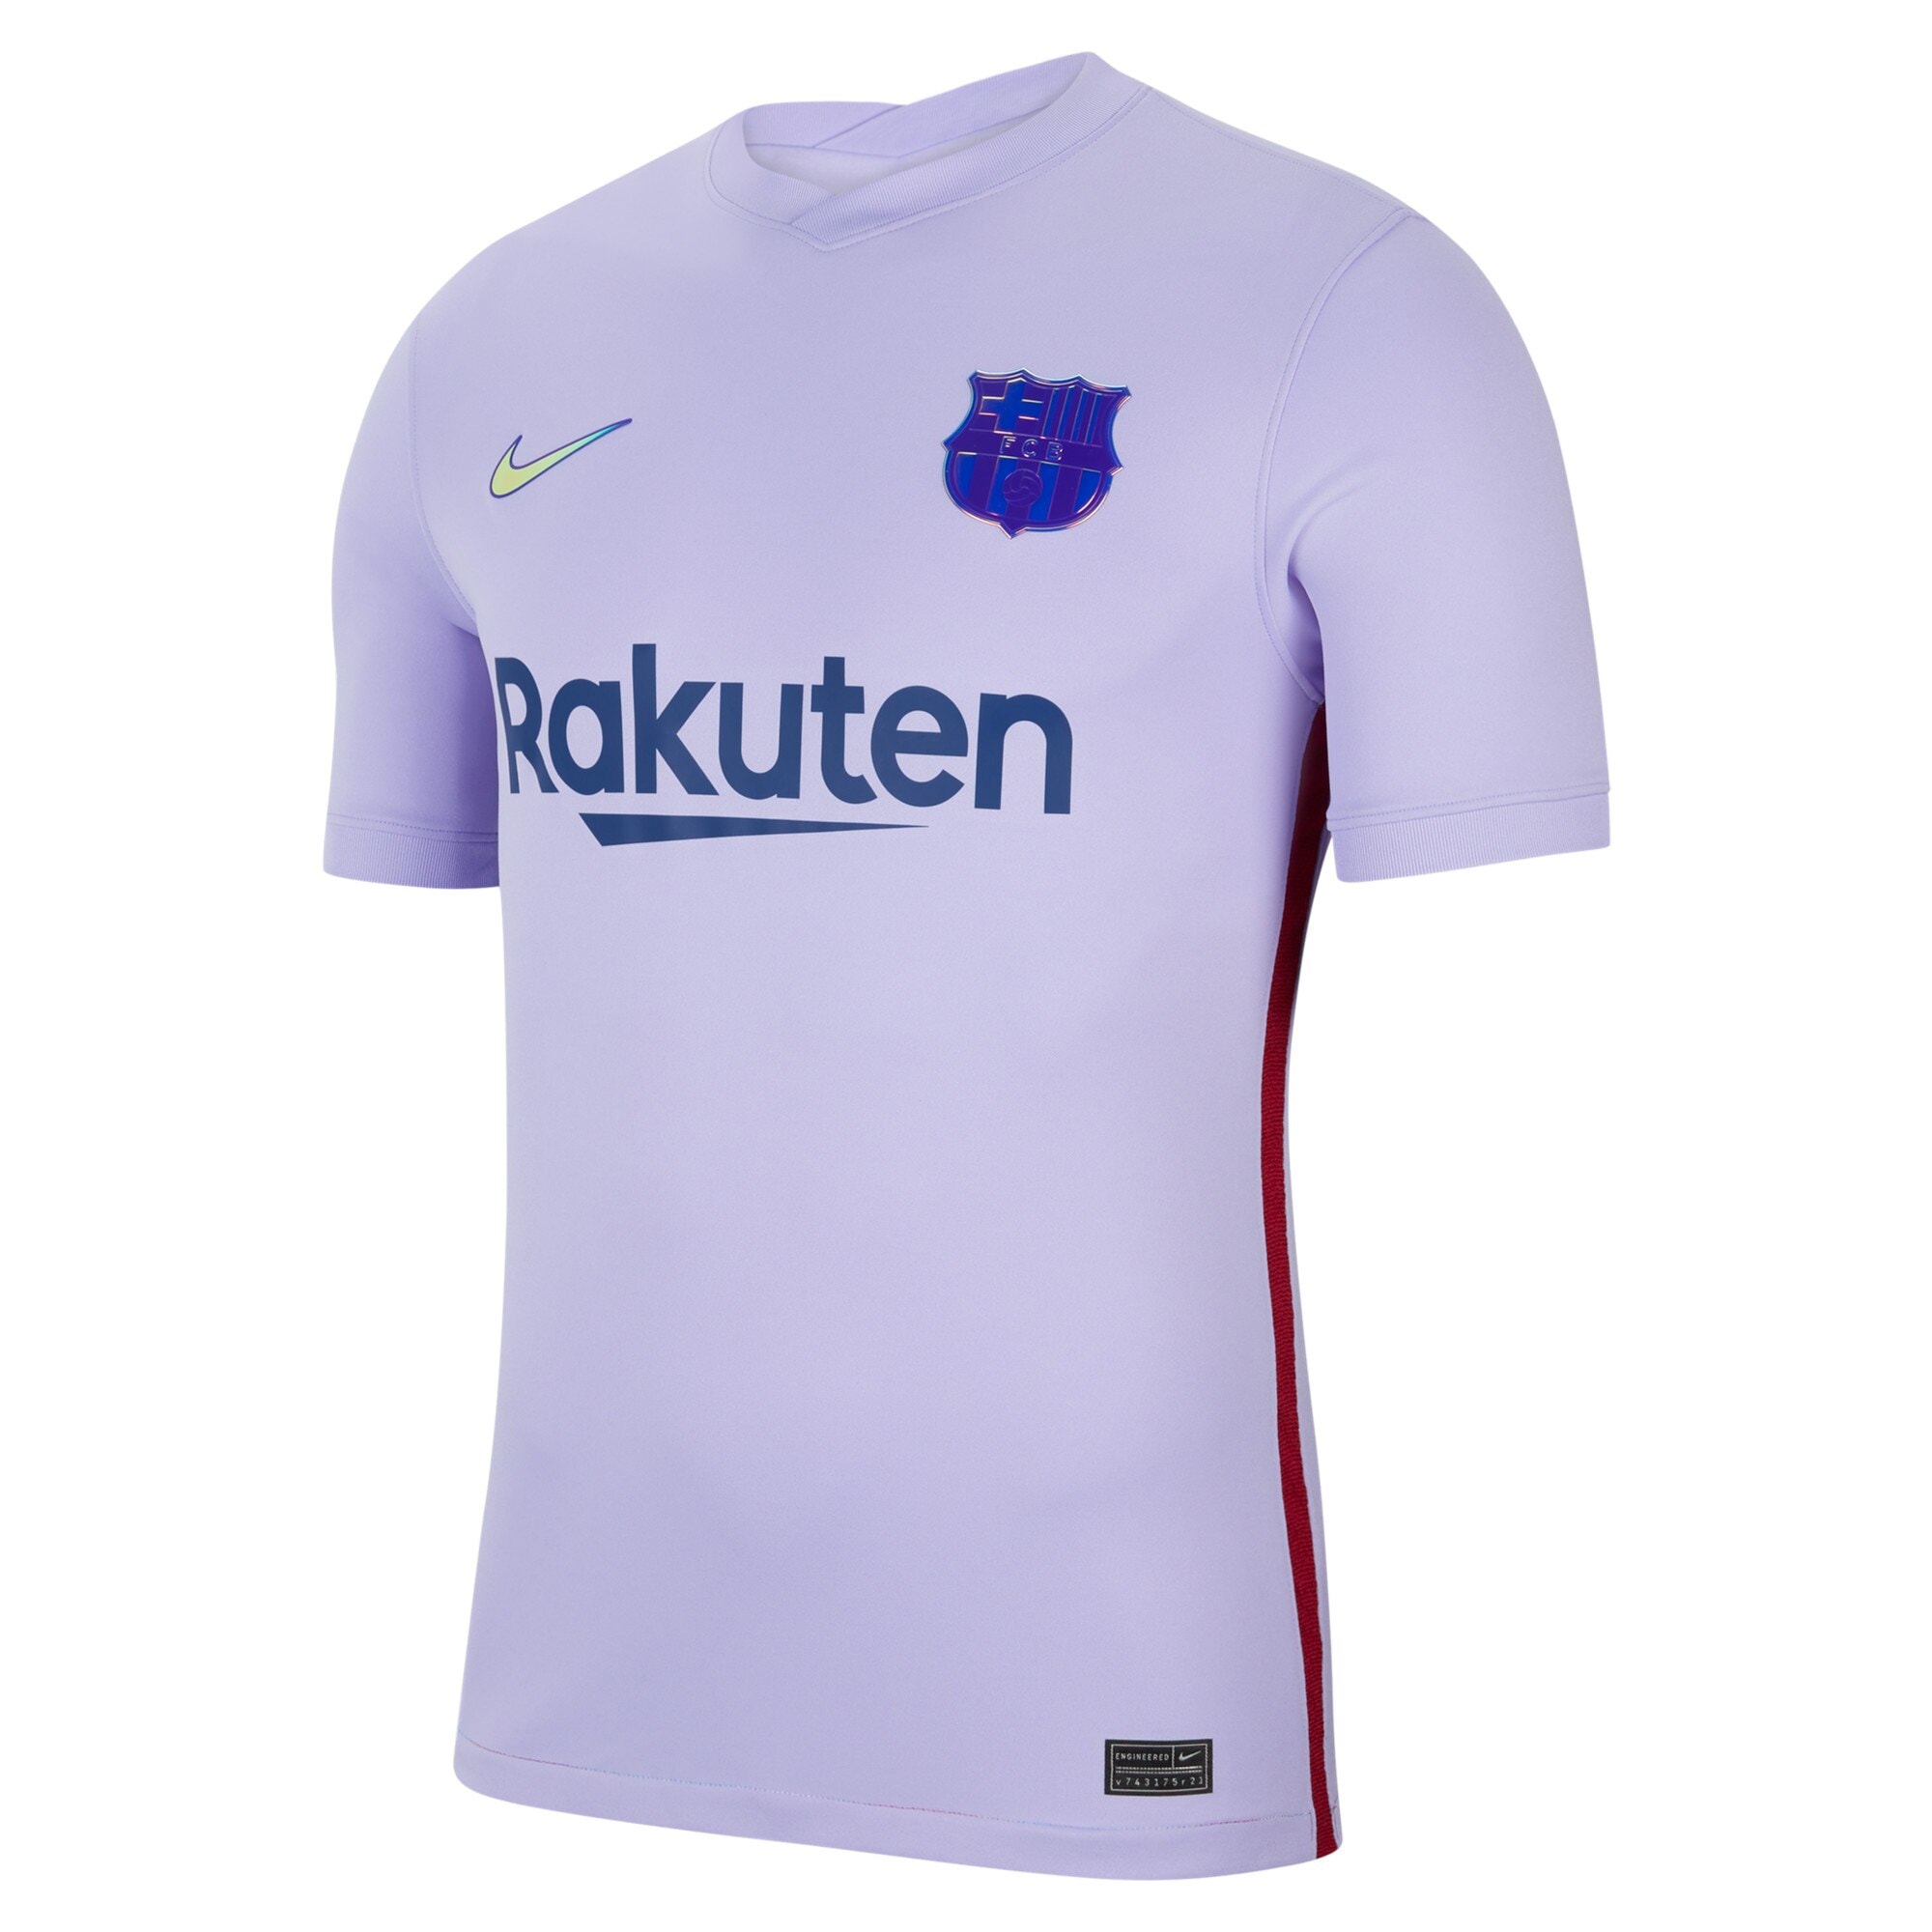 Barcelona Away Stadium Shirt 2021-22 with Pedri 16 printing